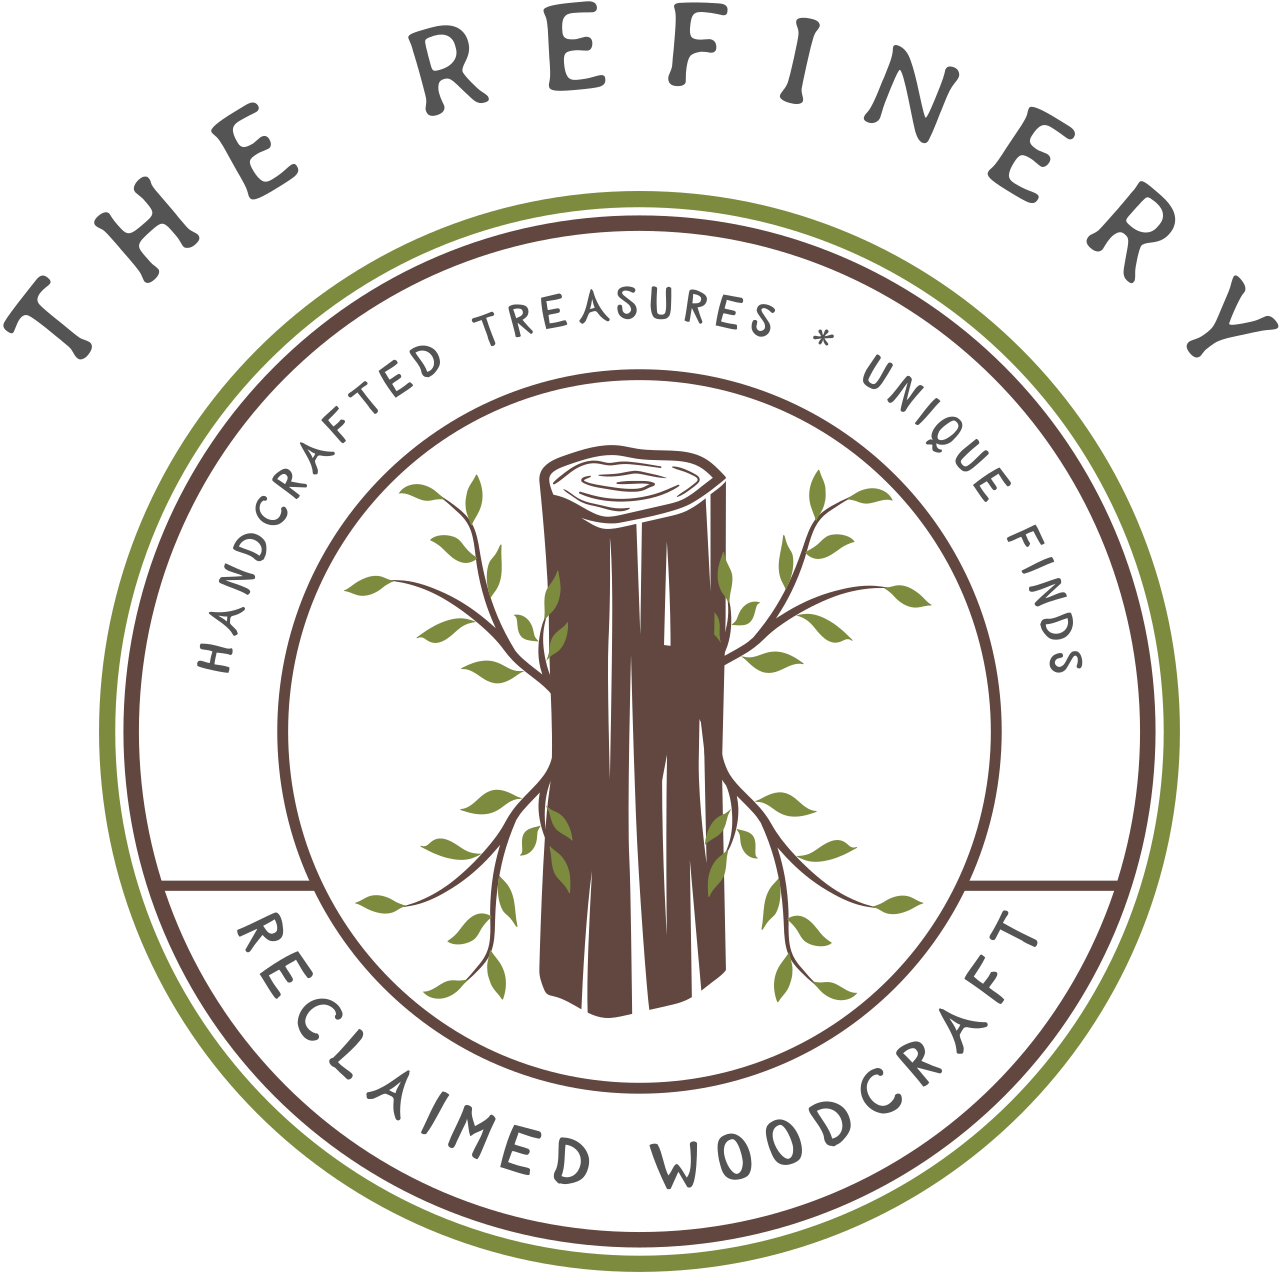 The Refinery's logo